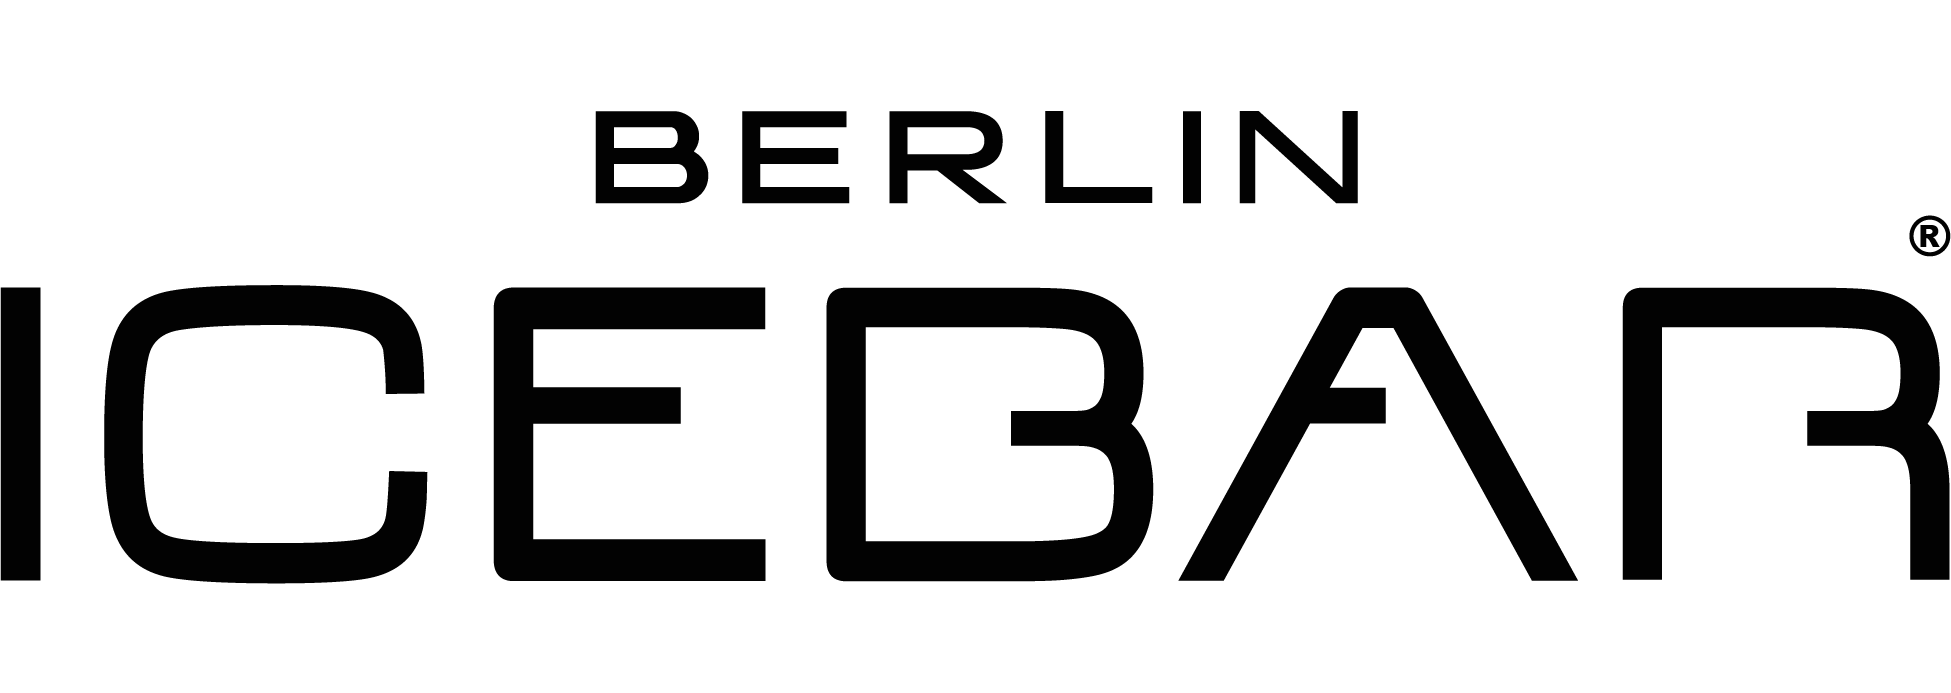 Berlin Icebar